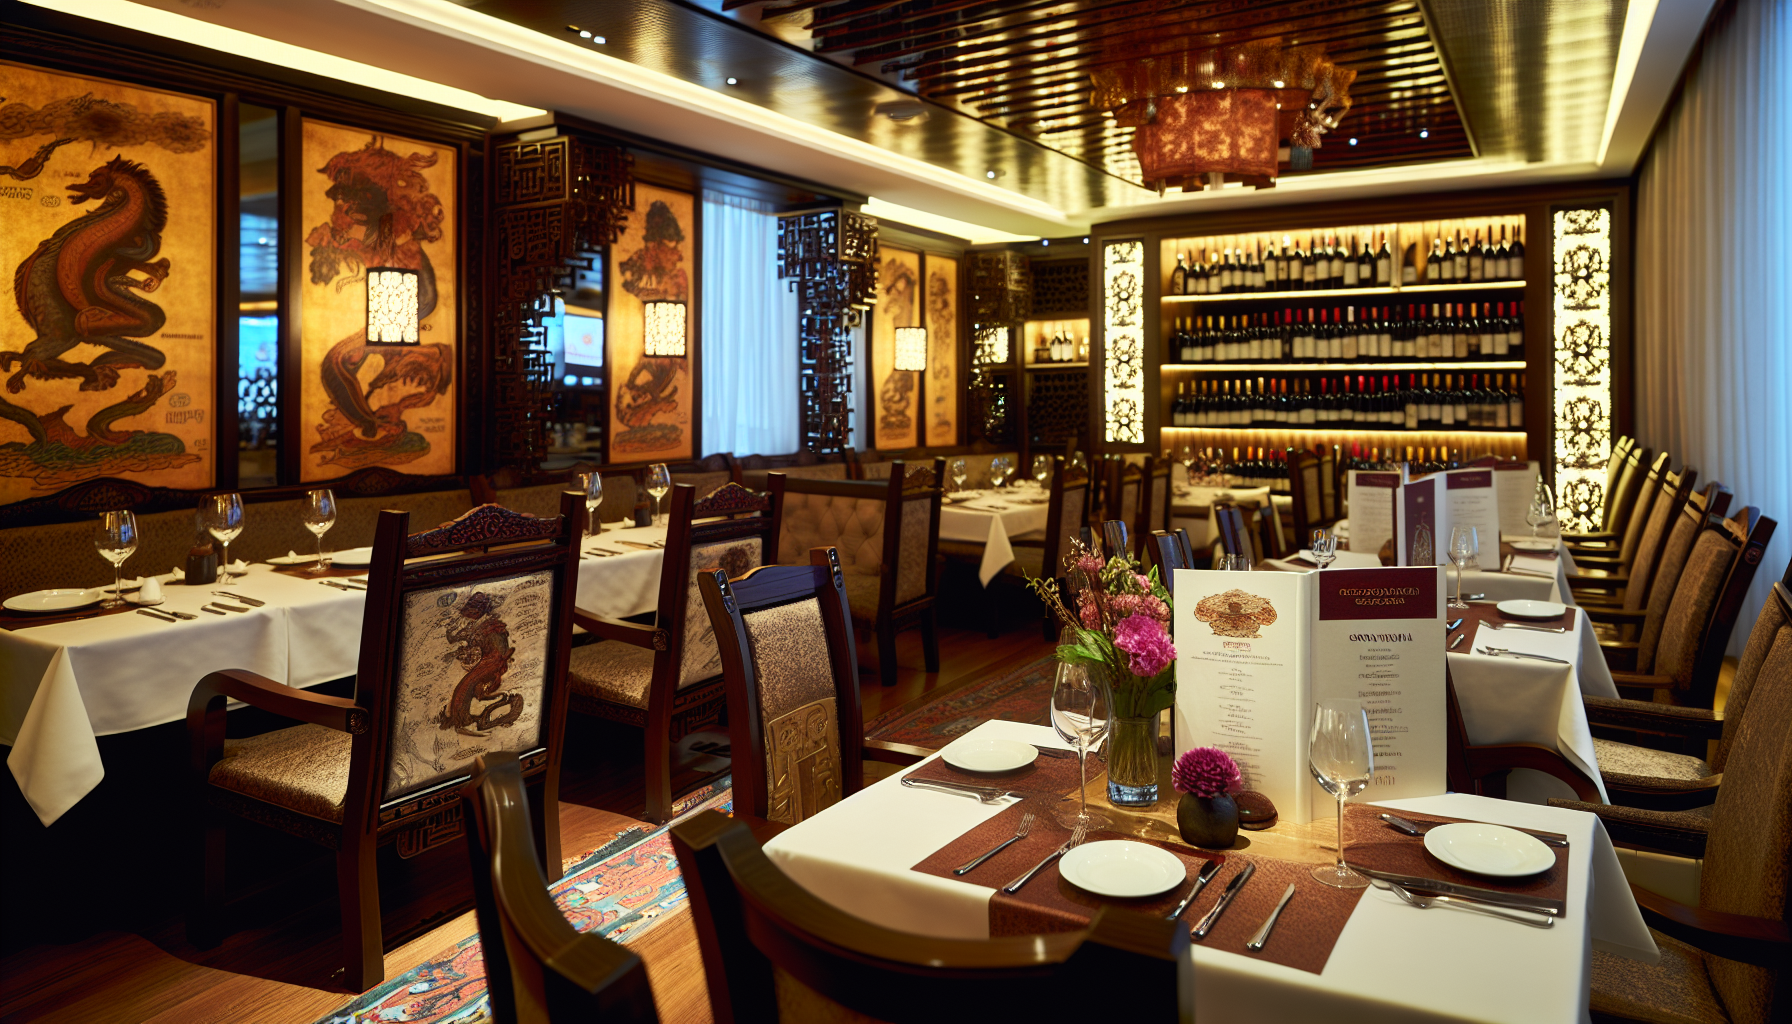 Elegant interior of an international restaurant with extensive wine menu